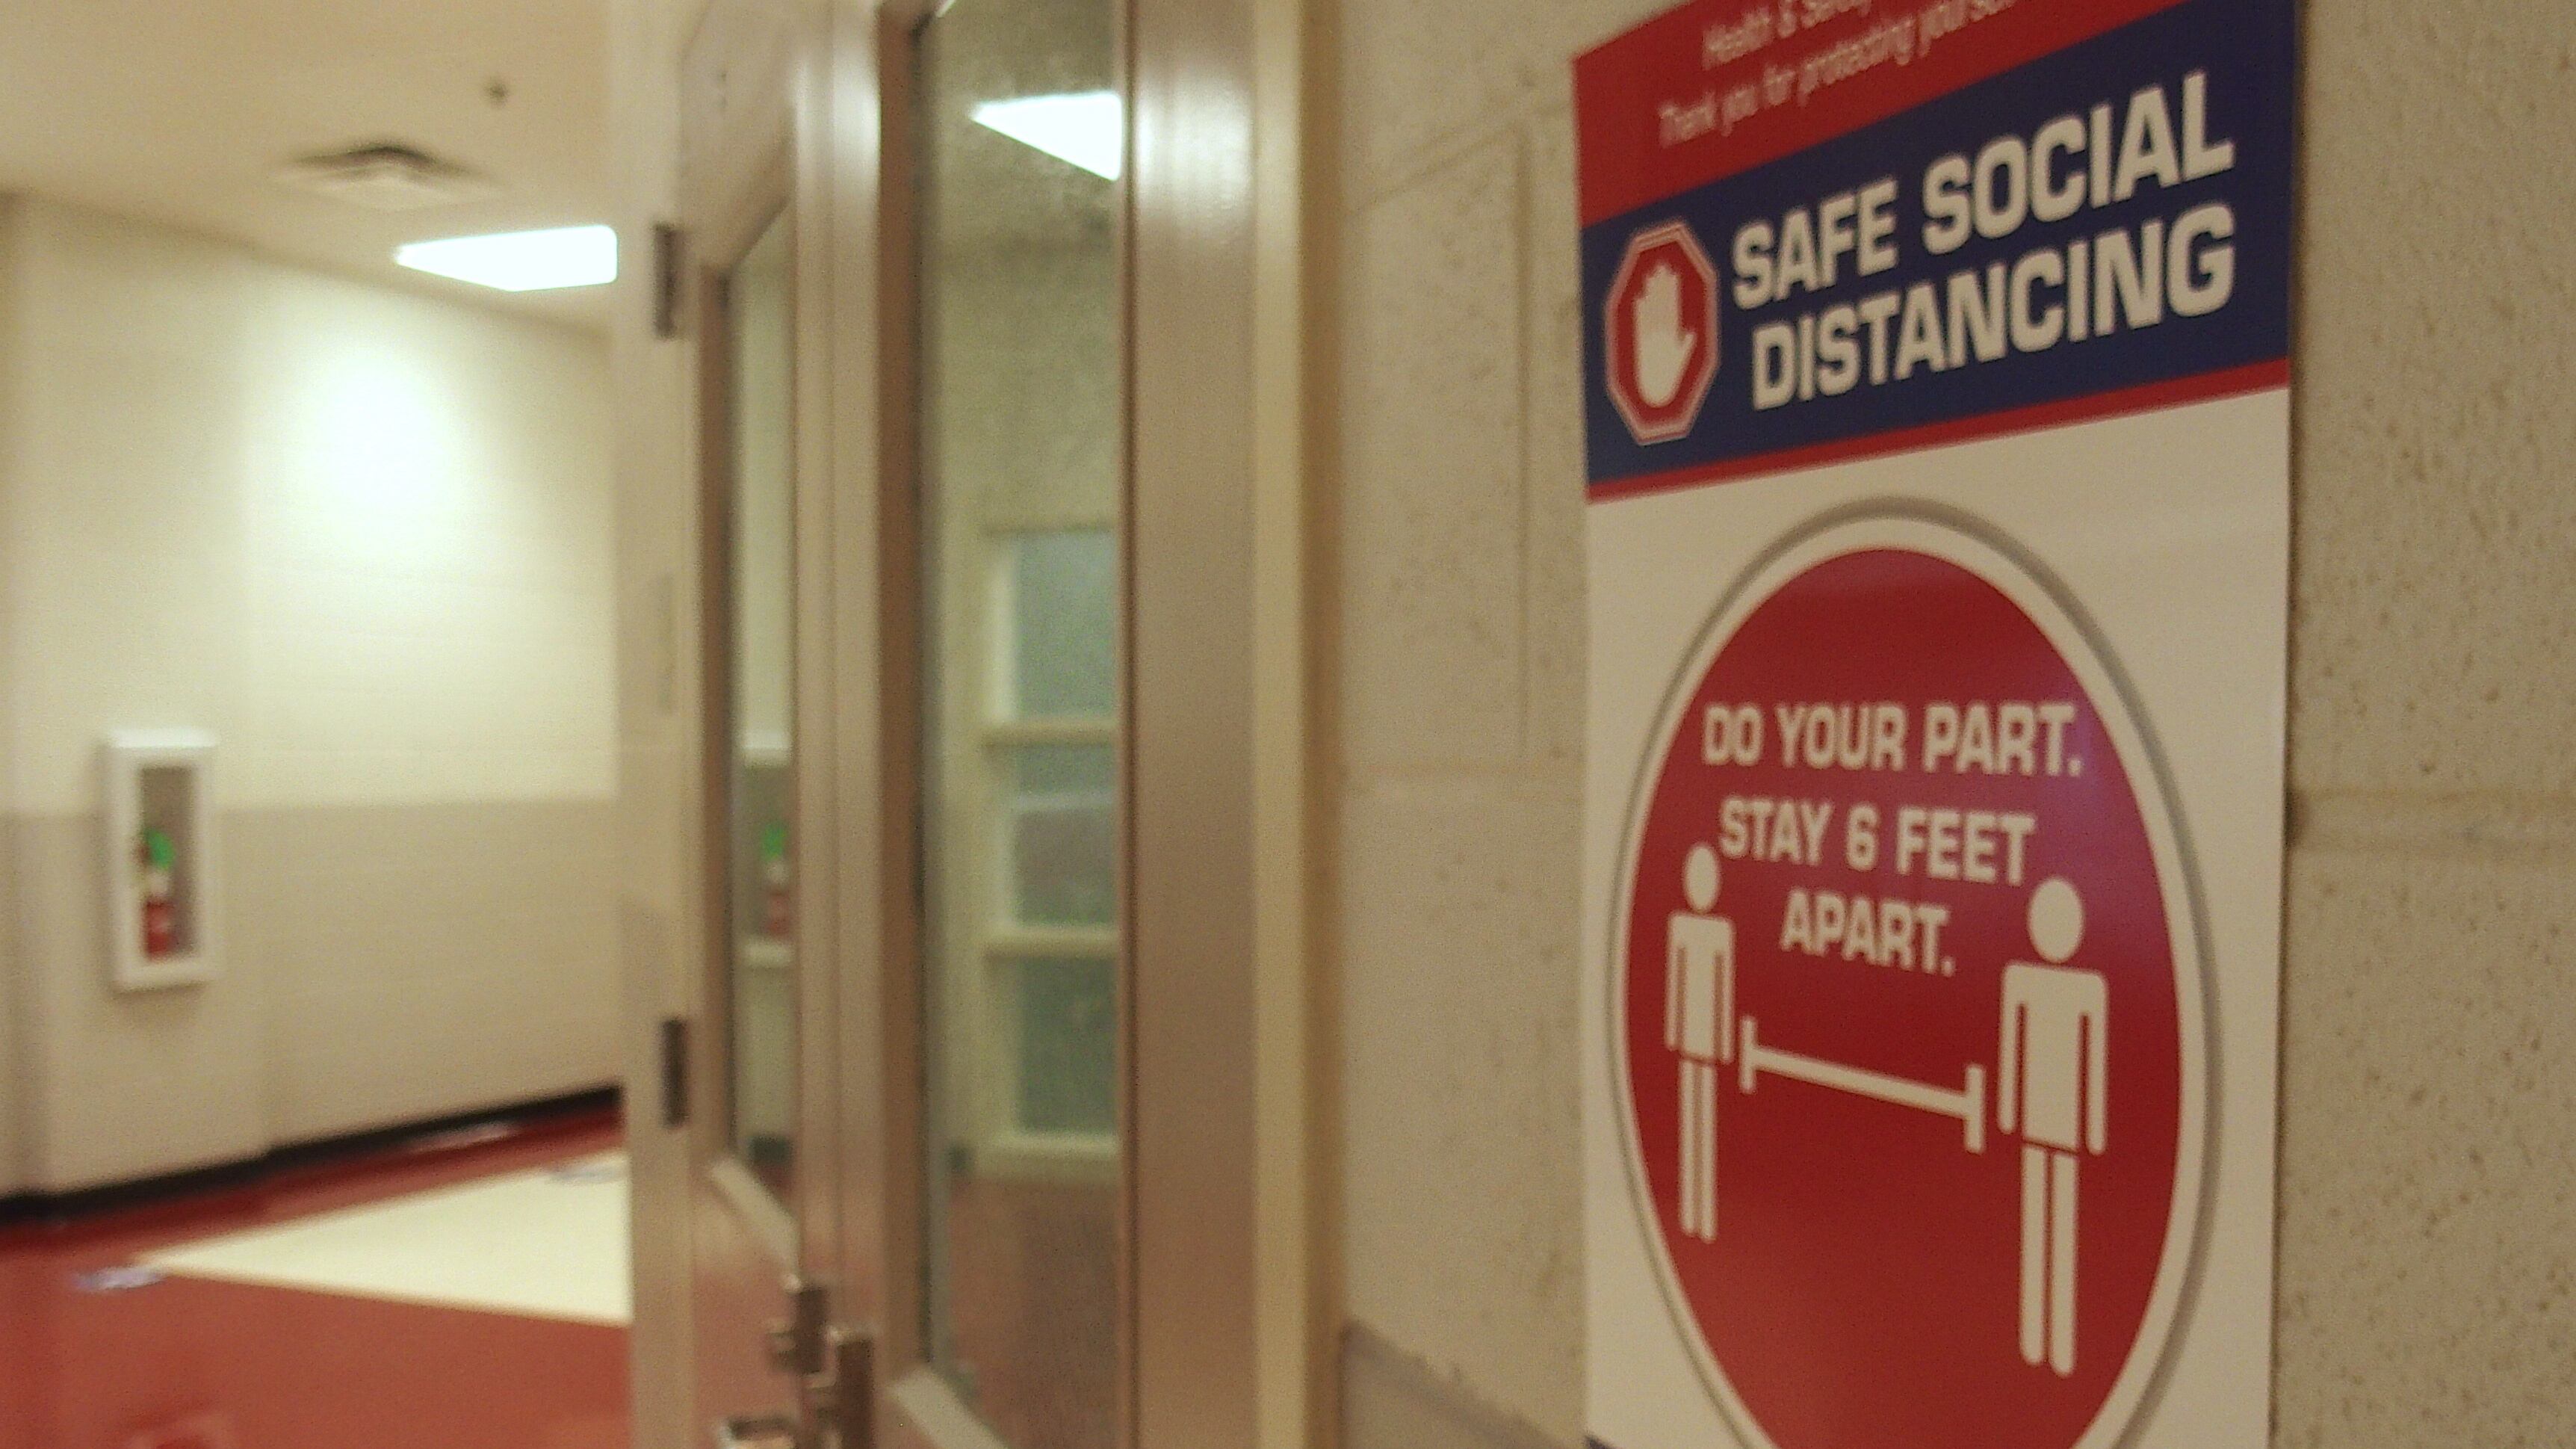 A poster promoting social distancing hangs in a school building hallway